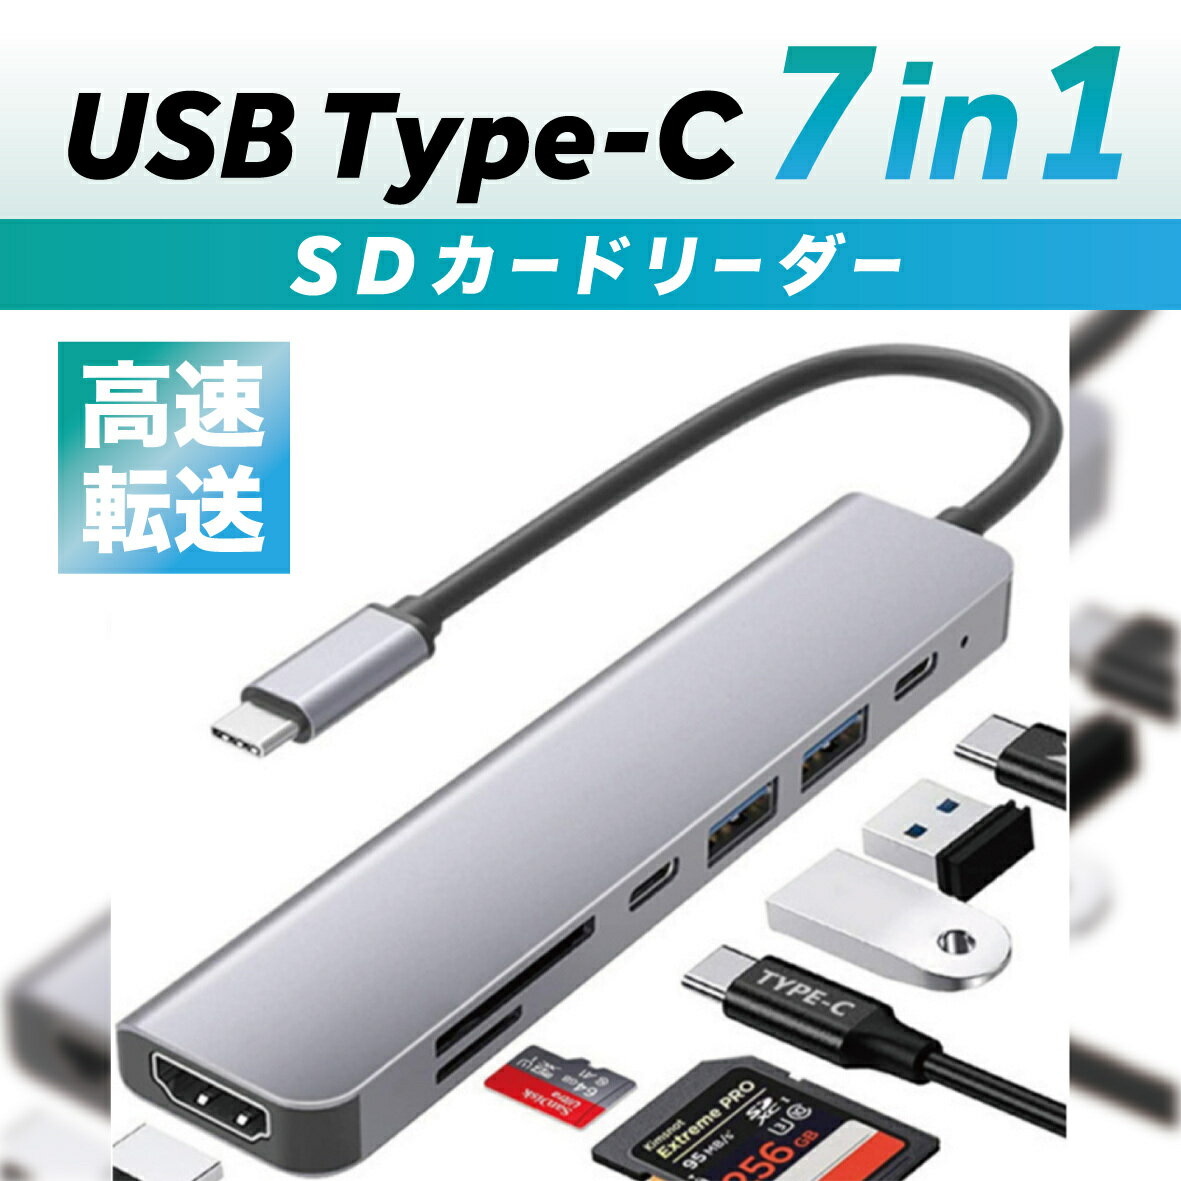 7in1 usbハブ type-c HUB HDMI 変換 4K PD充電対応 SD/microSD USB3.0 タイプc変換アダプター ドッキングステーション ChromeBook Surface Android Nintendo SwitchUSB C デバイス対応